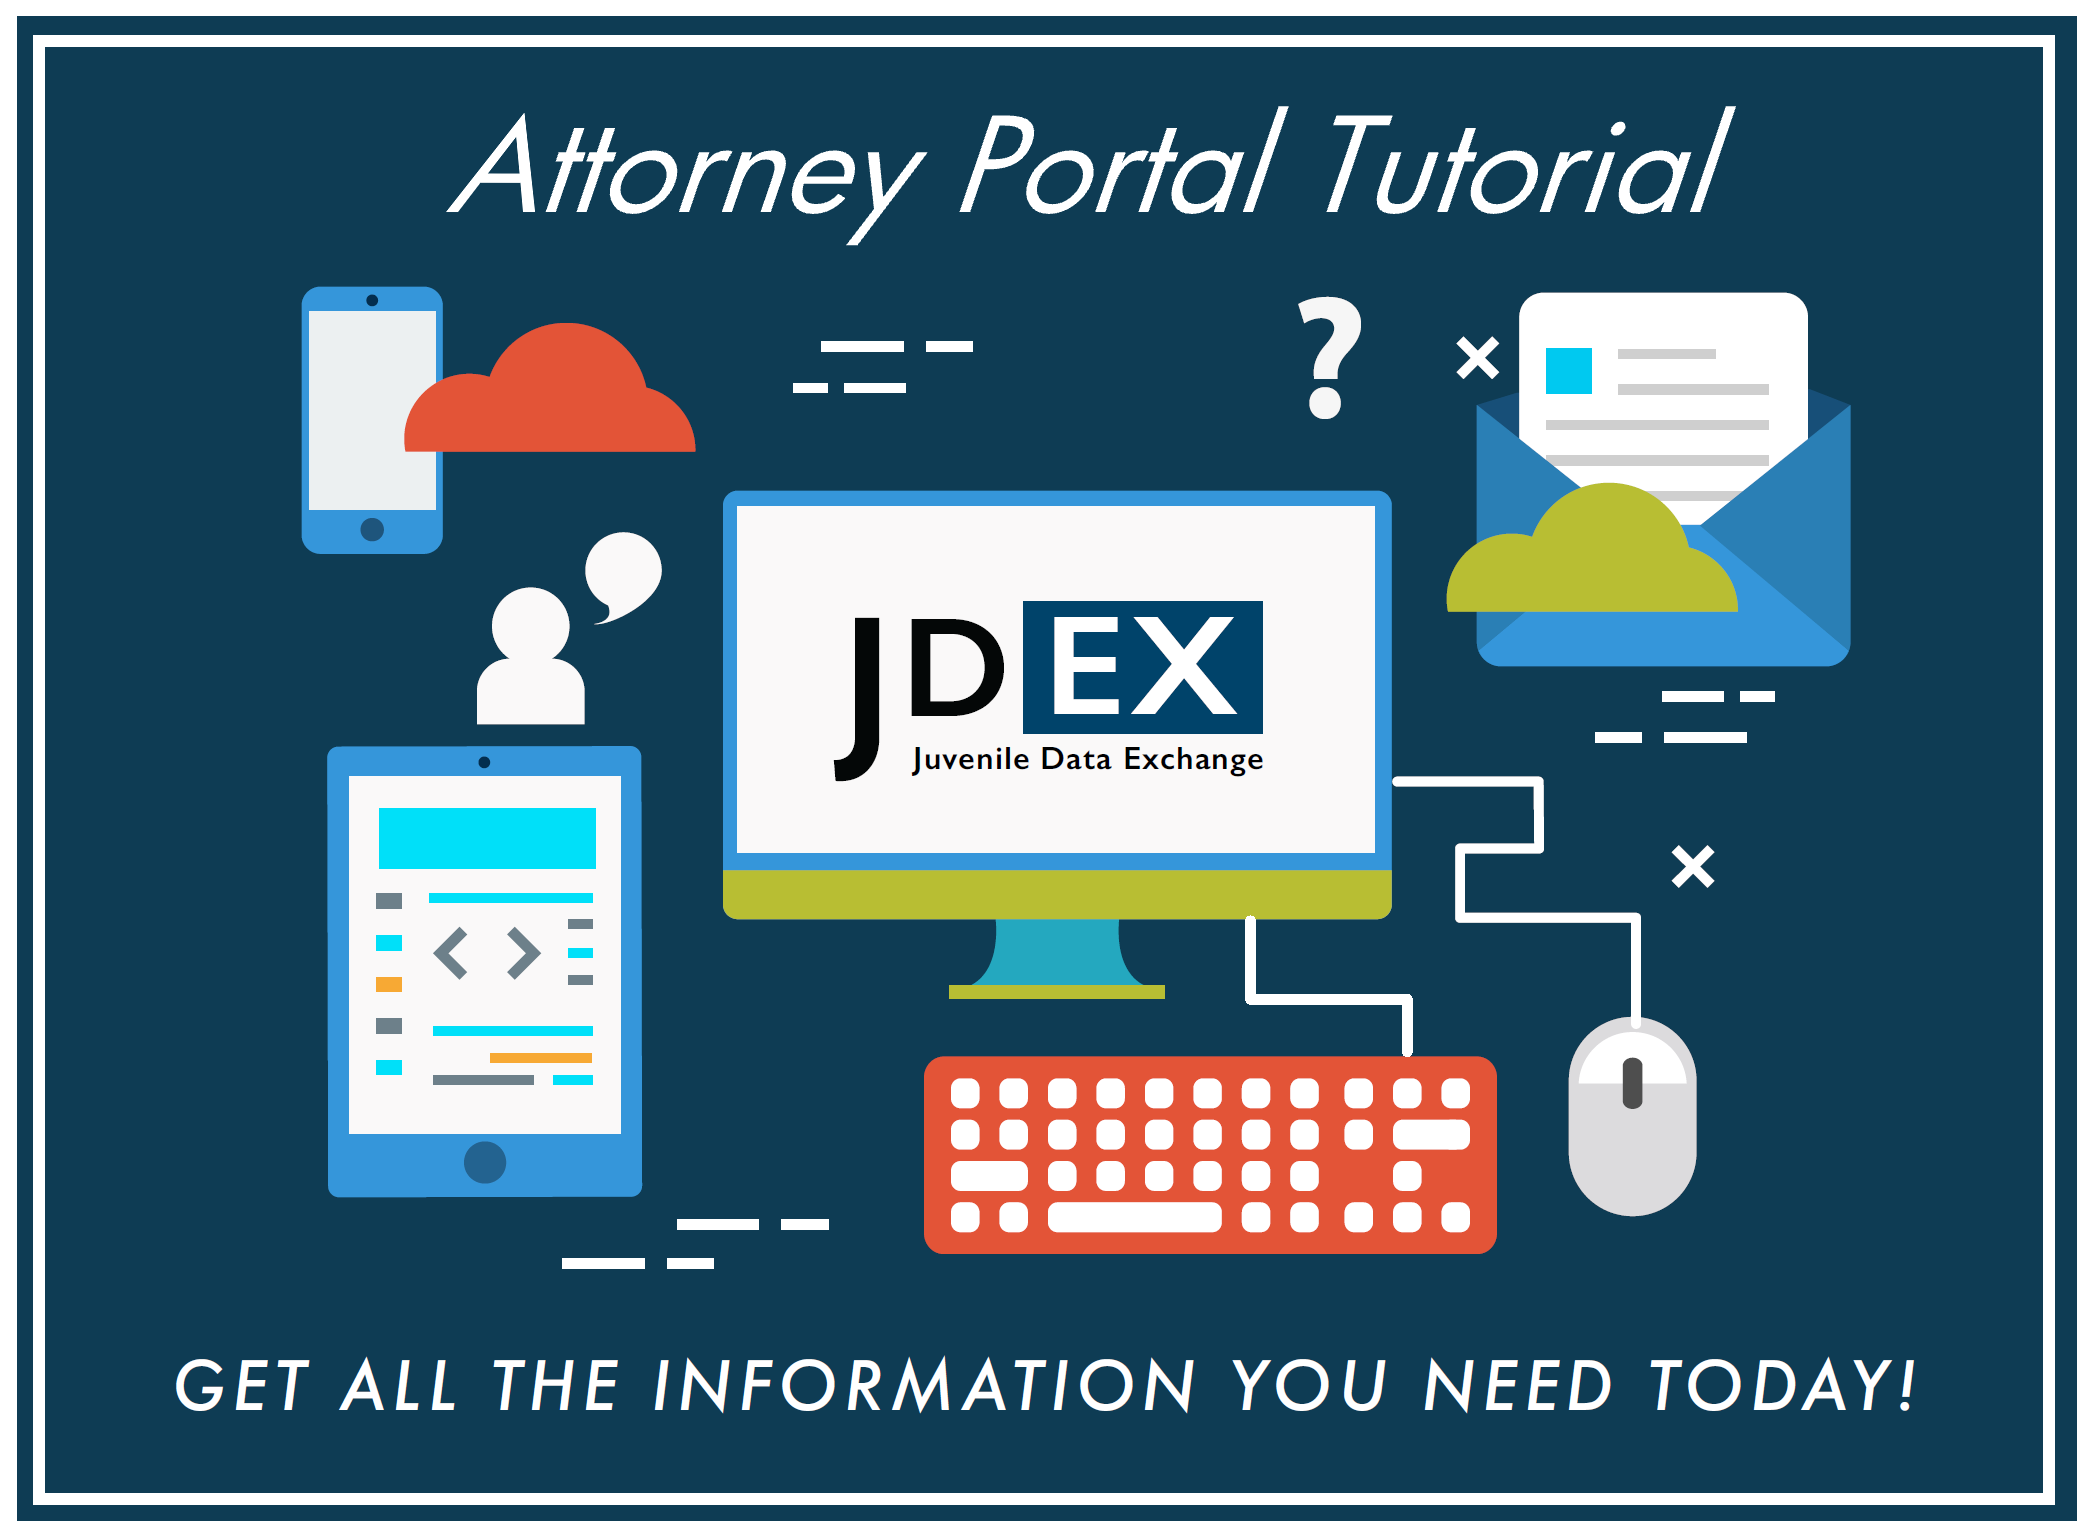 Attorney Portal Tutorial